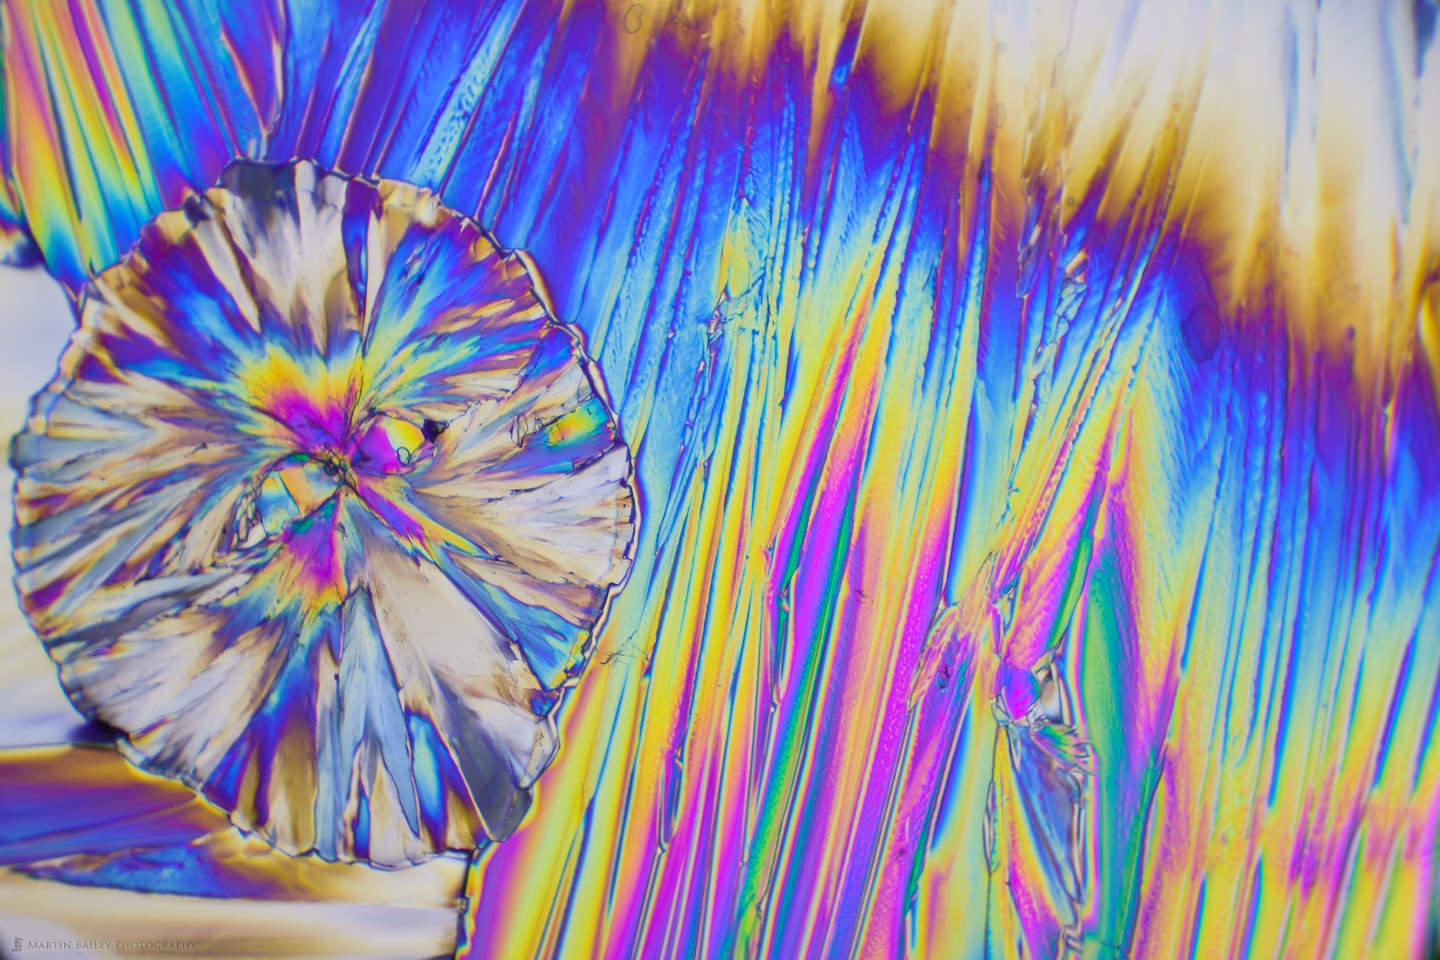 Rainbox Island (Polarized Citric Acid Crystals 100X)